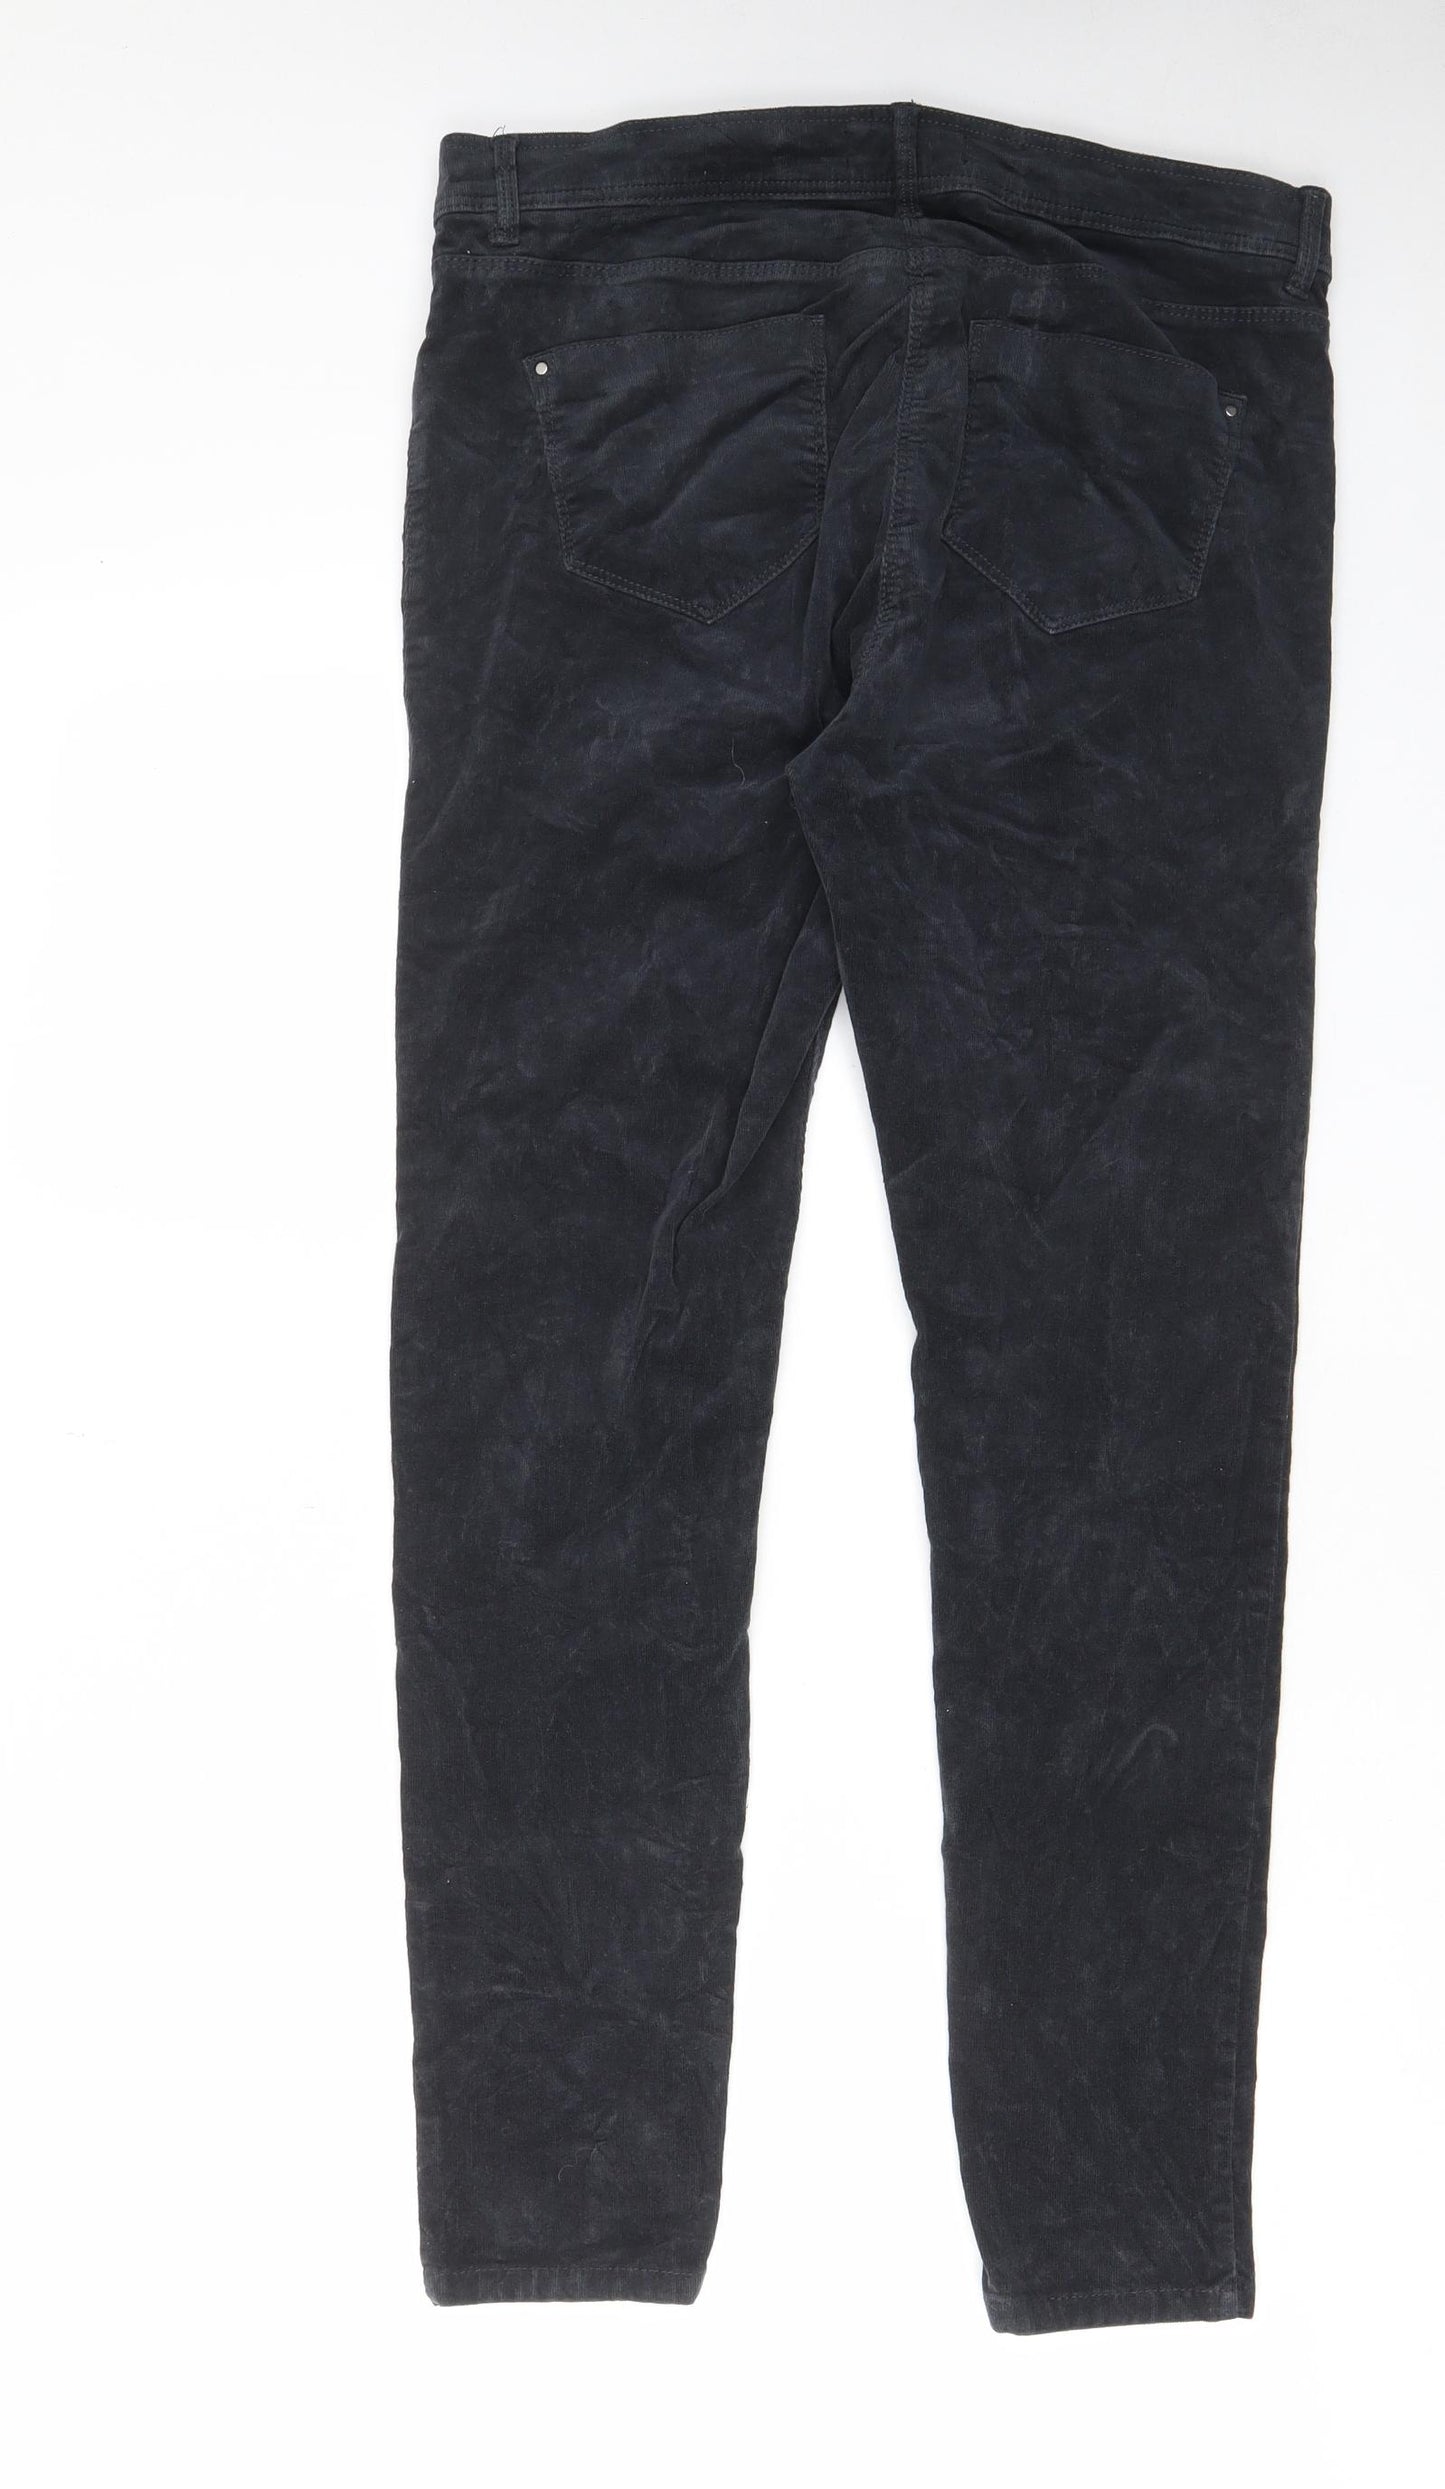 Dorothy Perkins Womens Grey Cotton Trousers Size 14 L29 in Regular Zip - Pockets, Belt Loops